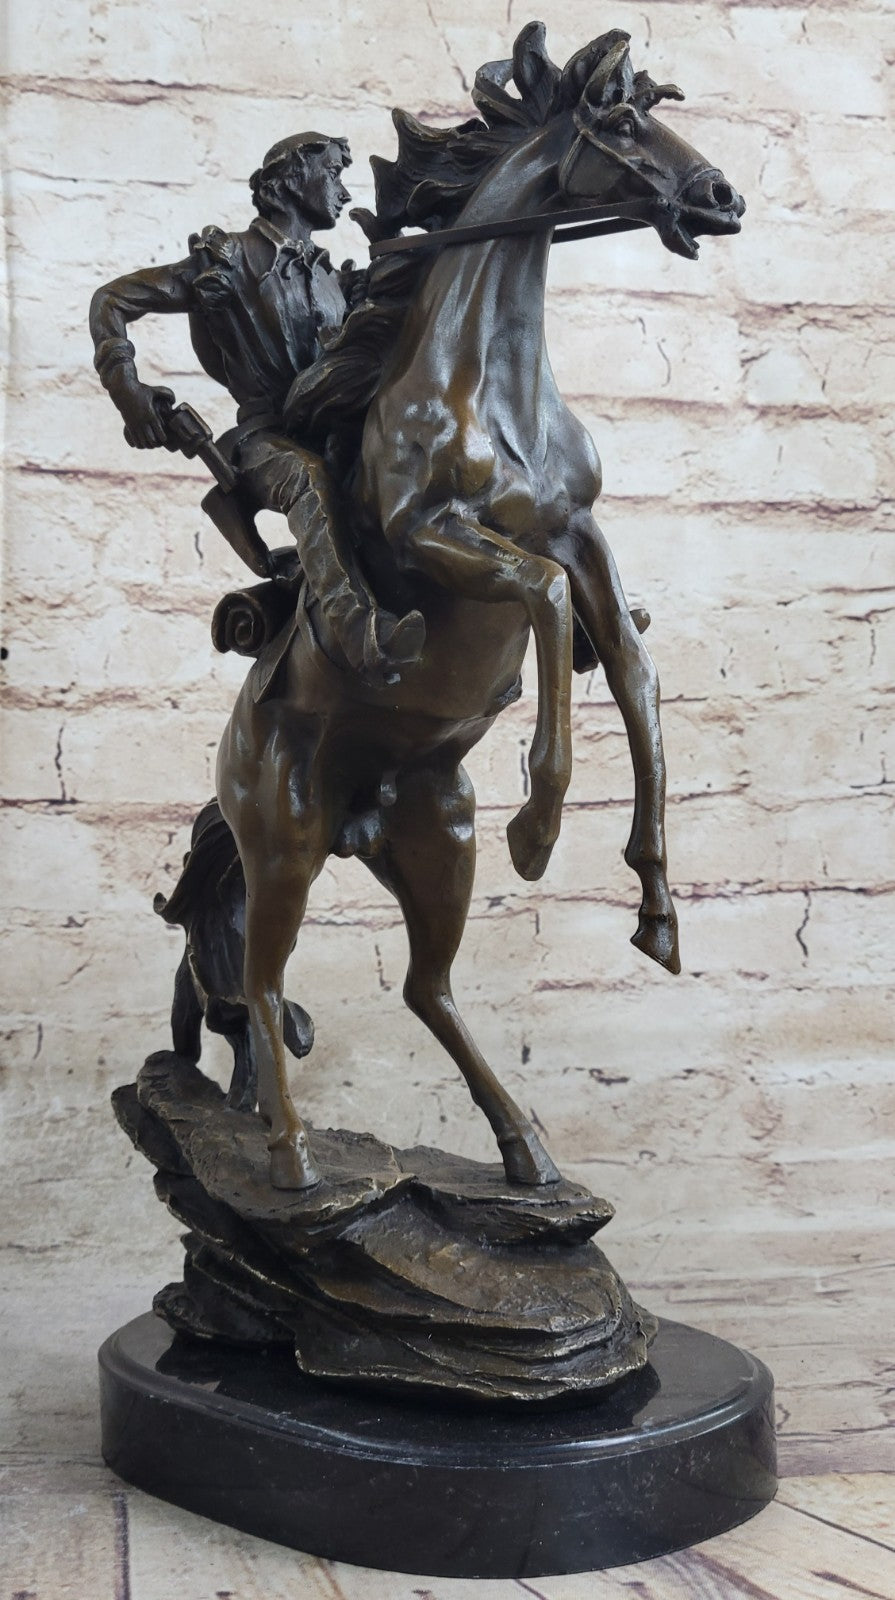 Rare Collectible Large Remington Tribute Horse And Cowboy Bronze Sculpture